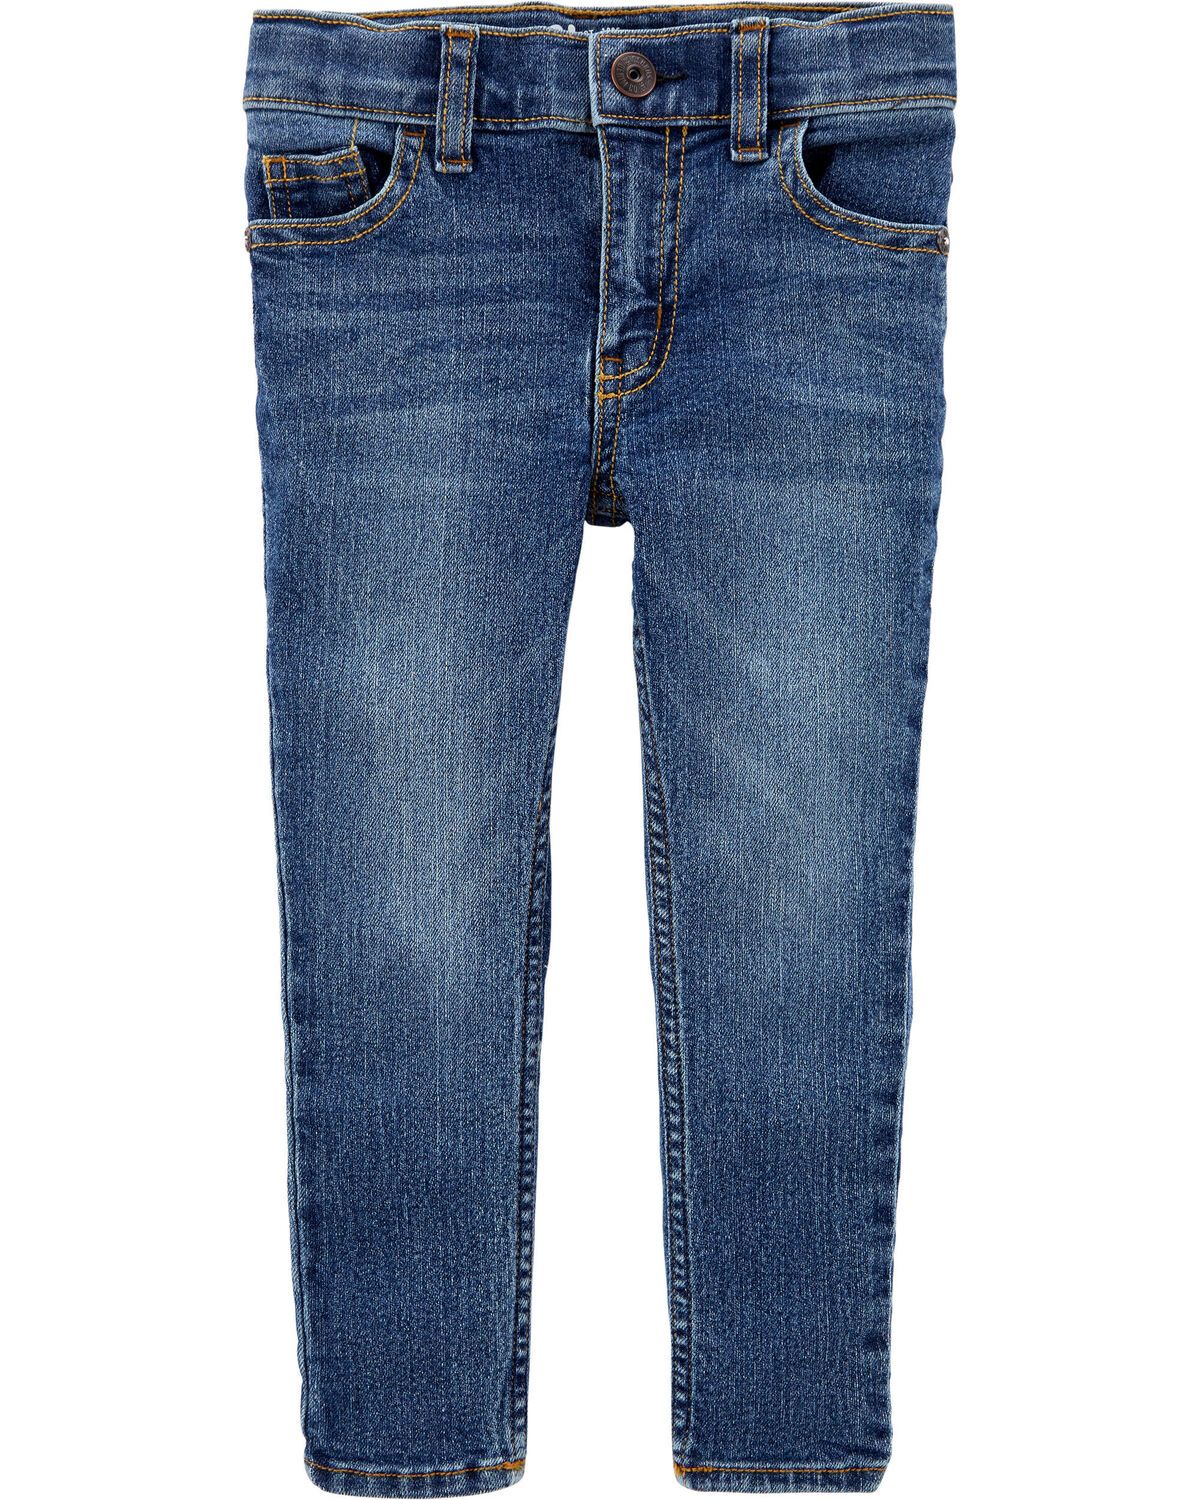 Indigo Bright Wash Baby Medium Wash Skinny-Leg Jeans | carters.com | Carter's